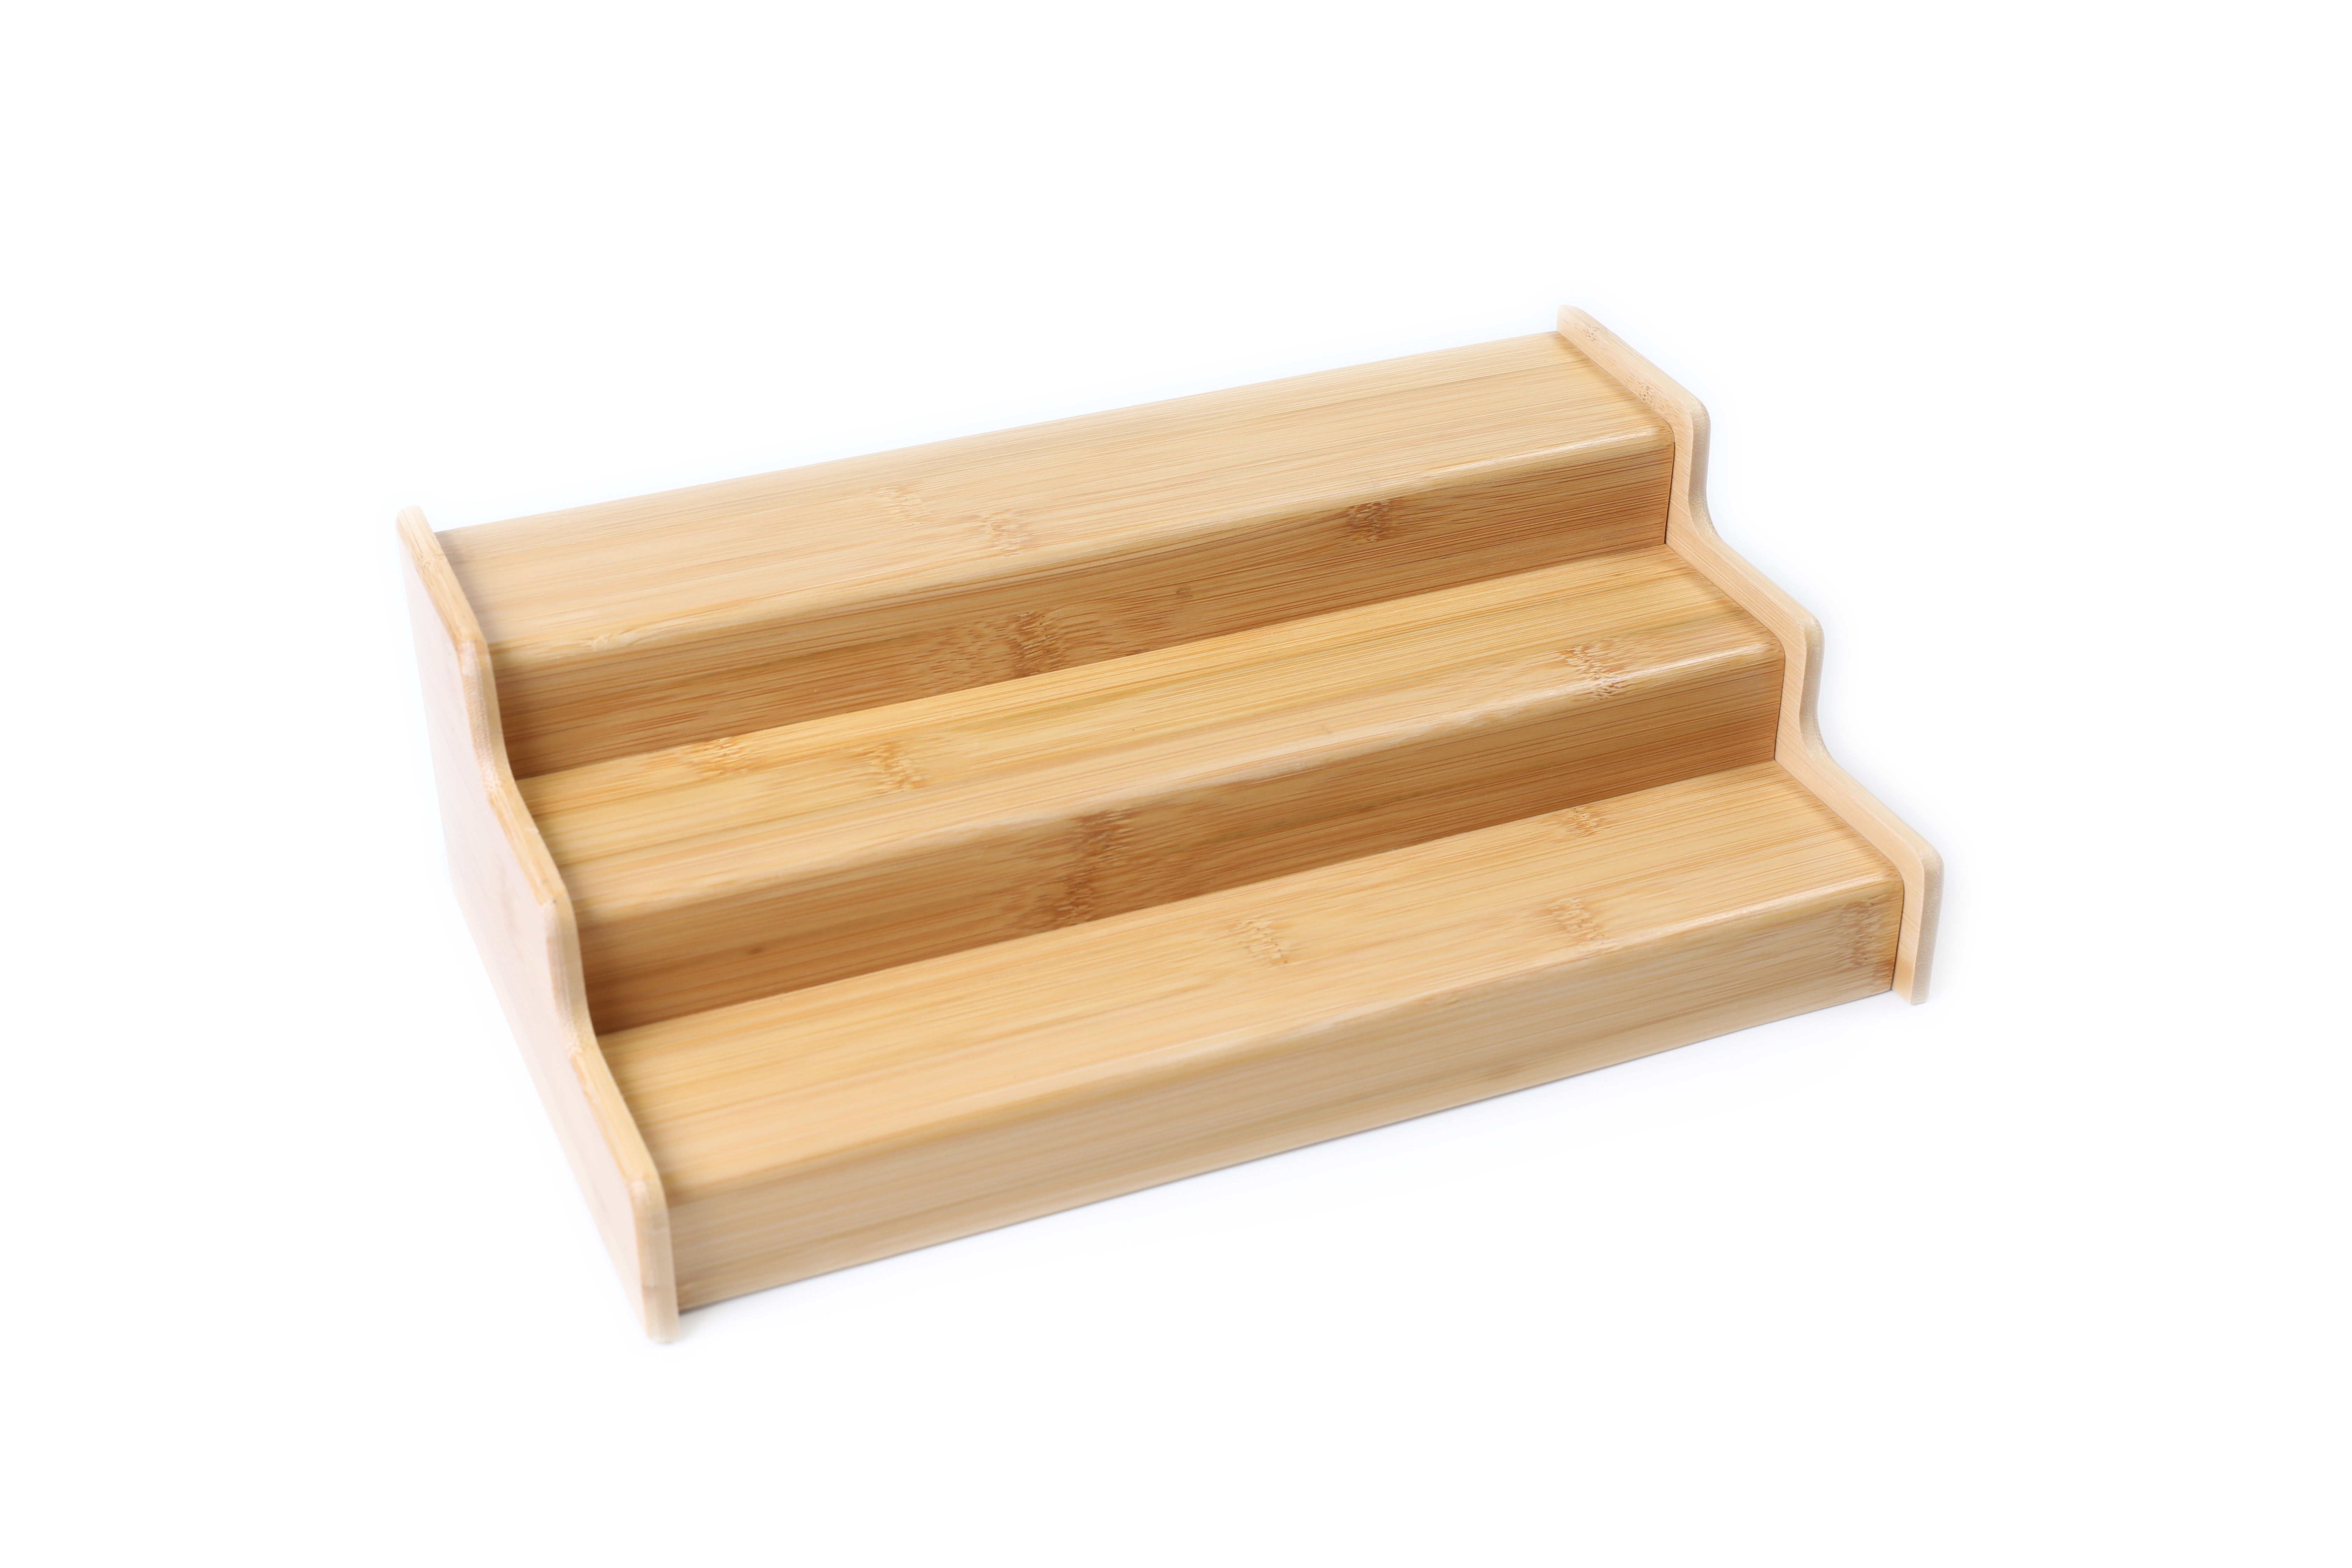 Seville Classics Expandable Bamboo Spice Rack Step Shelf Cabinet Organizer  BMB17087 - The Home Depot